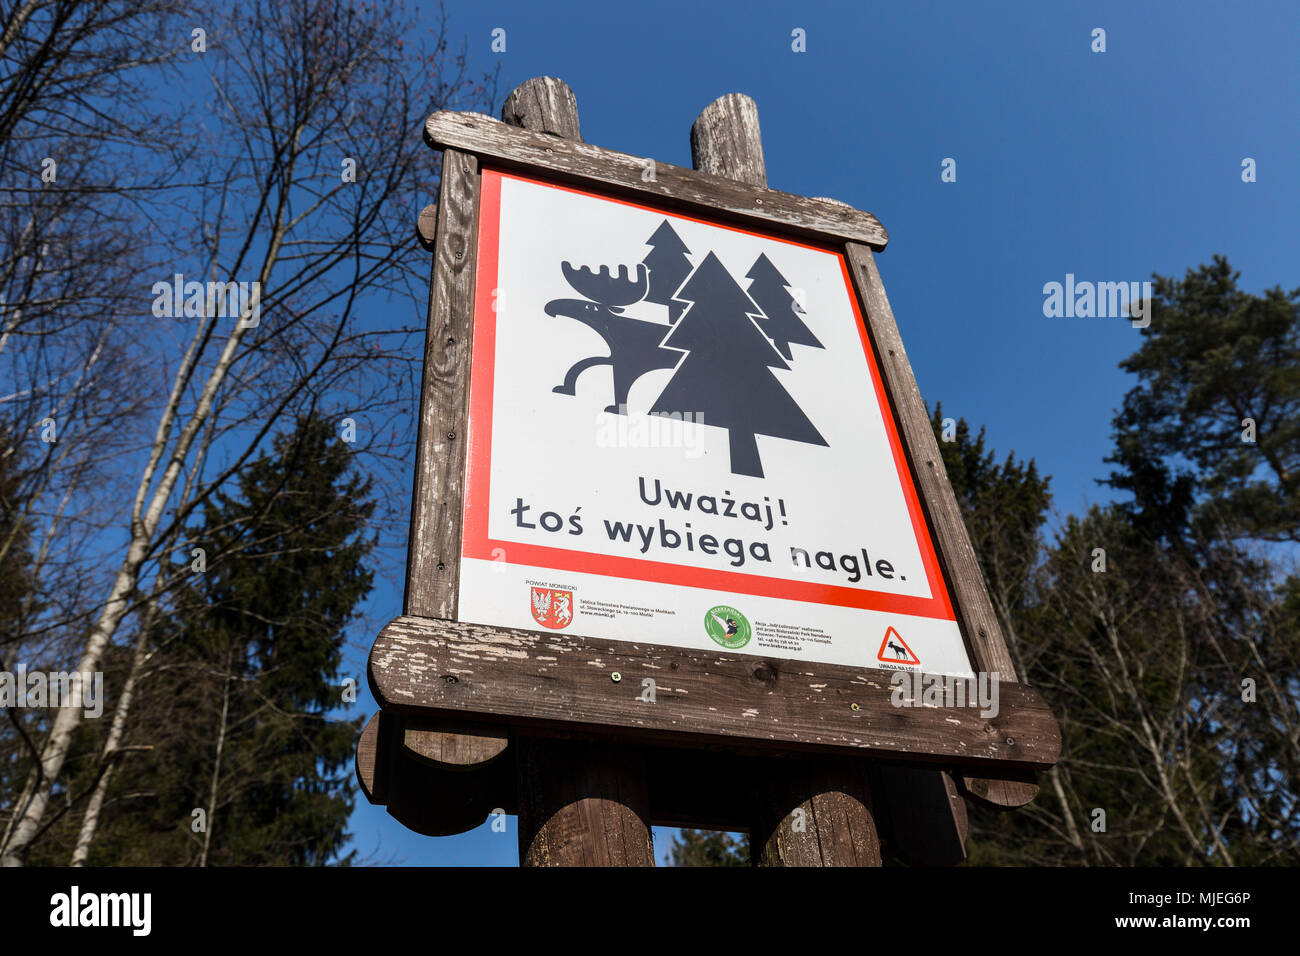 L'Europe, Pologne, Podlaskie Voivodeship, Carska Road, la protection de la nature sign Banque D'Images